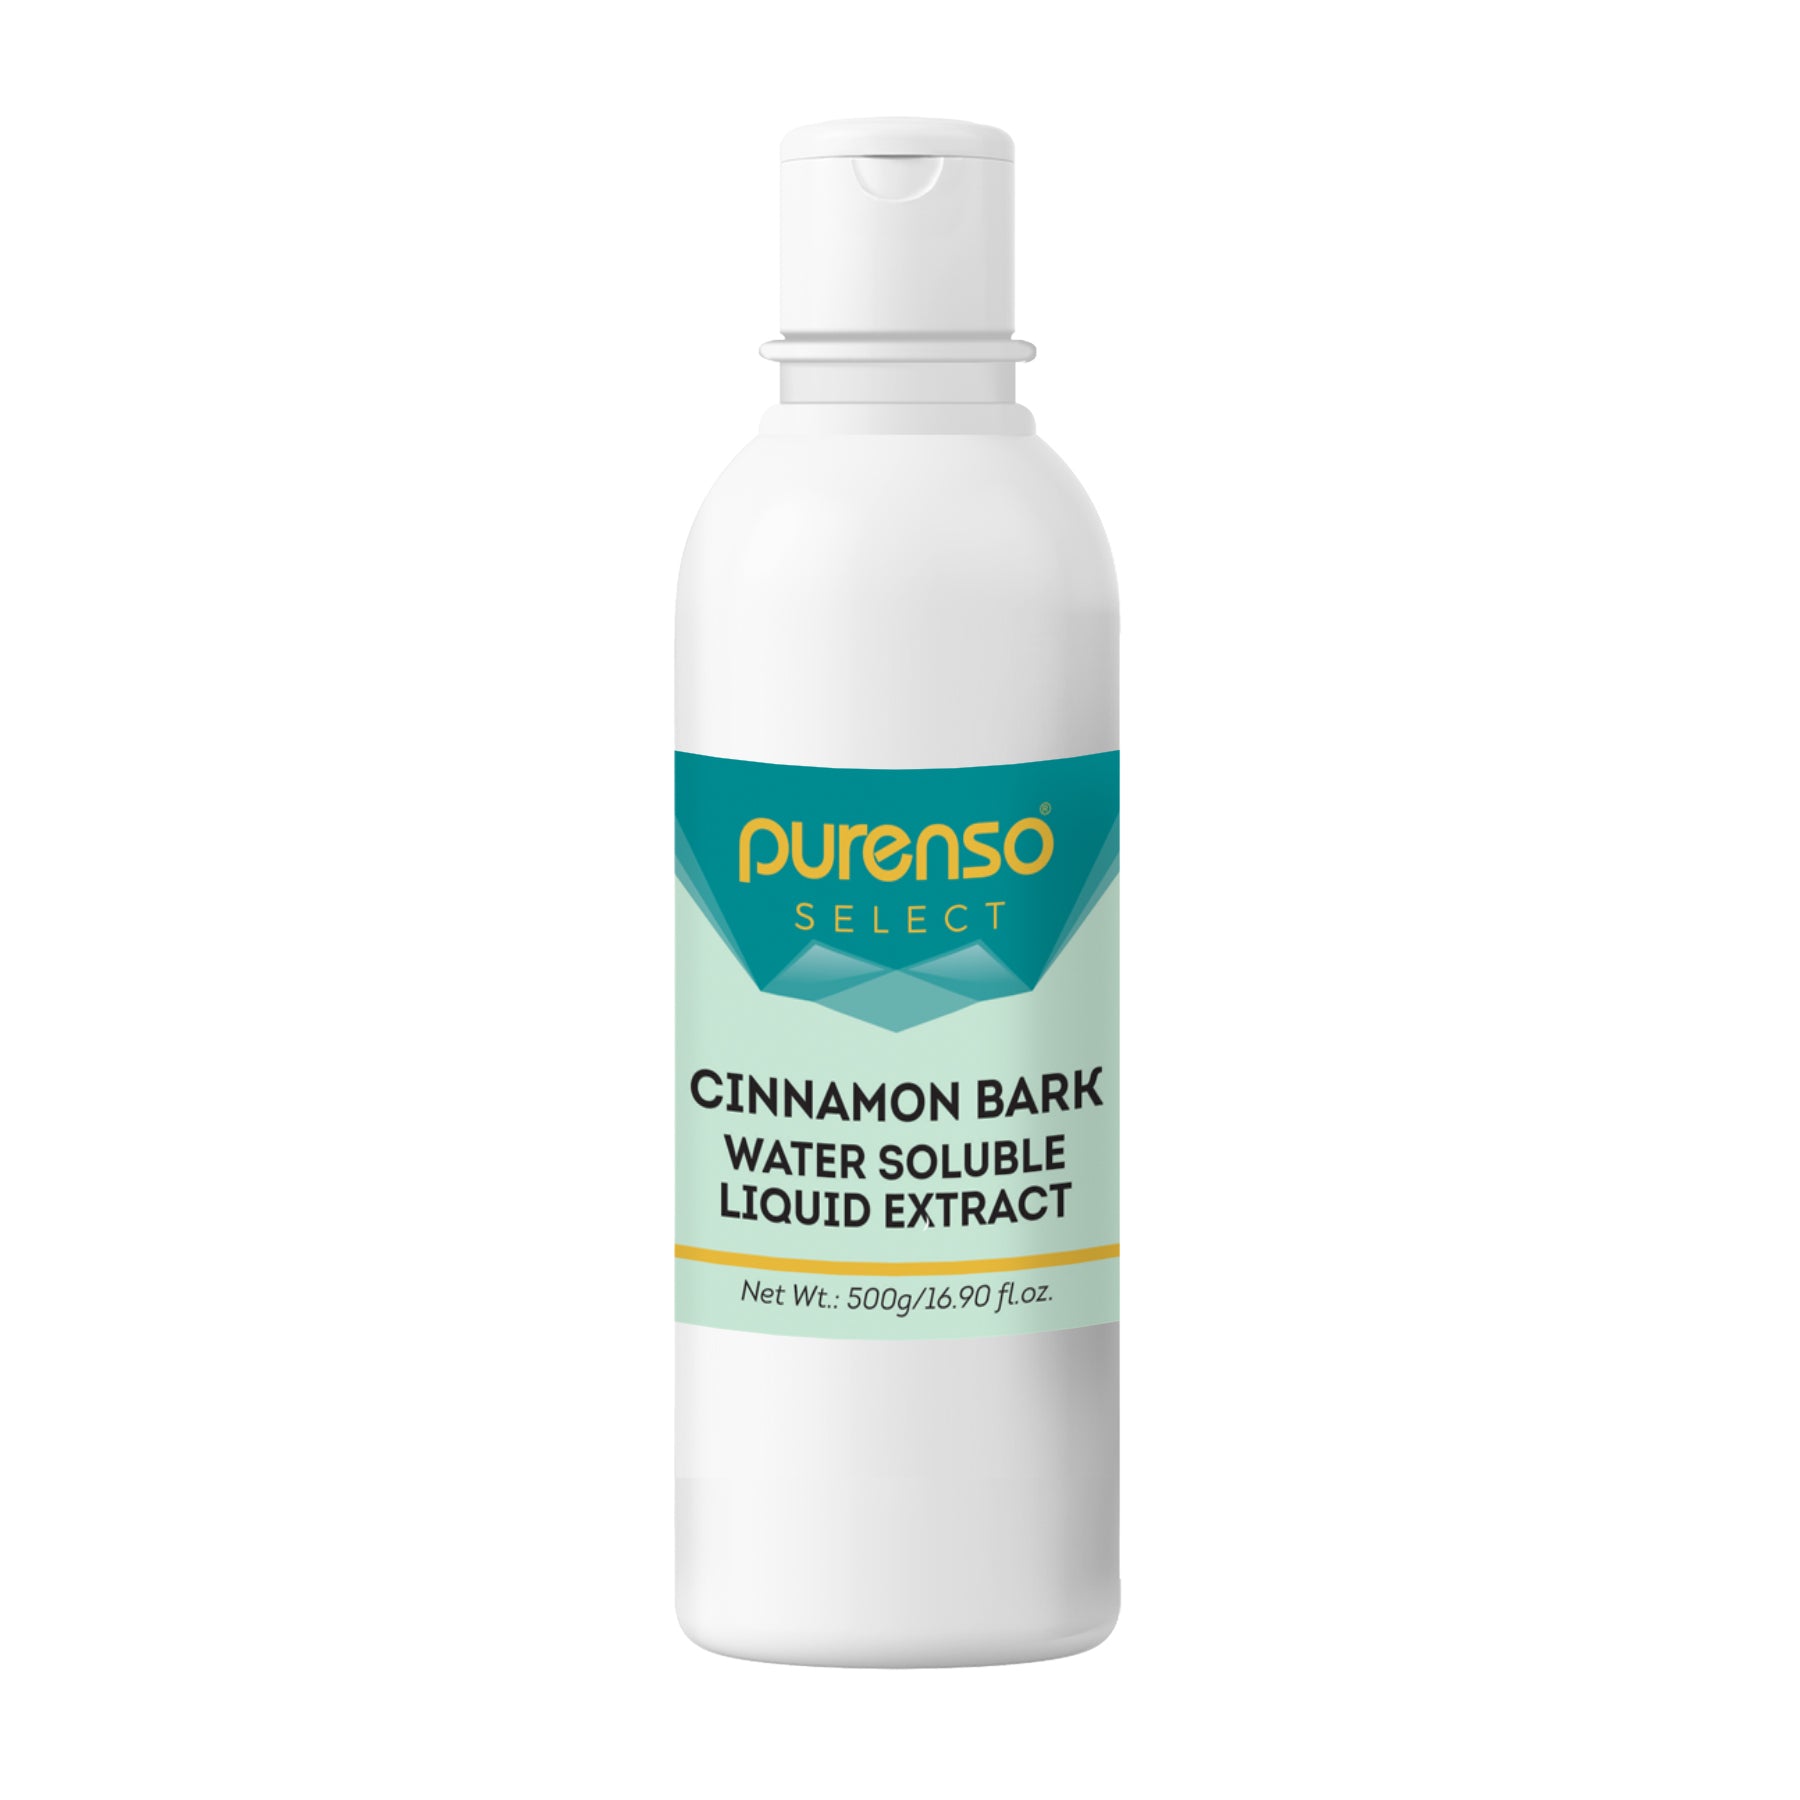 Cinnamon Bark Liquid Extract - Water Soluble